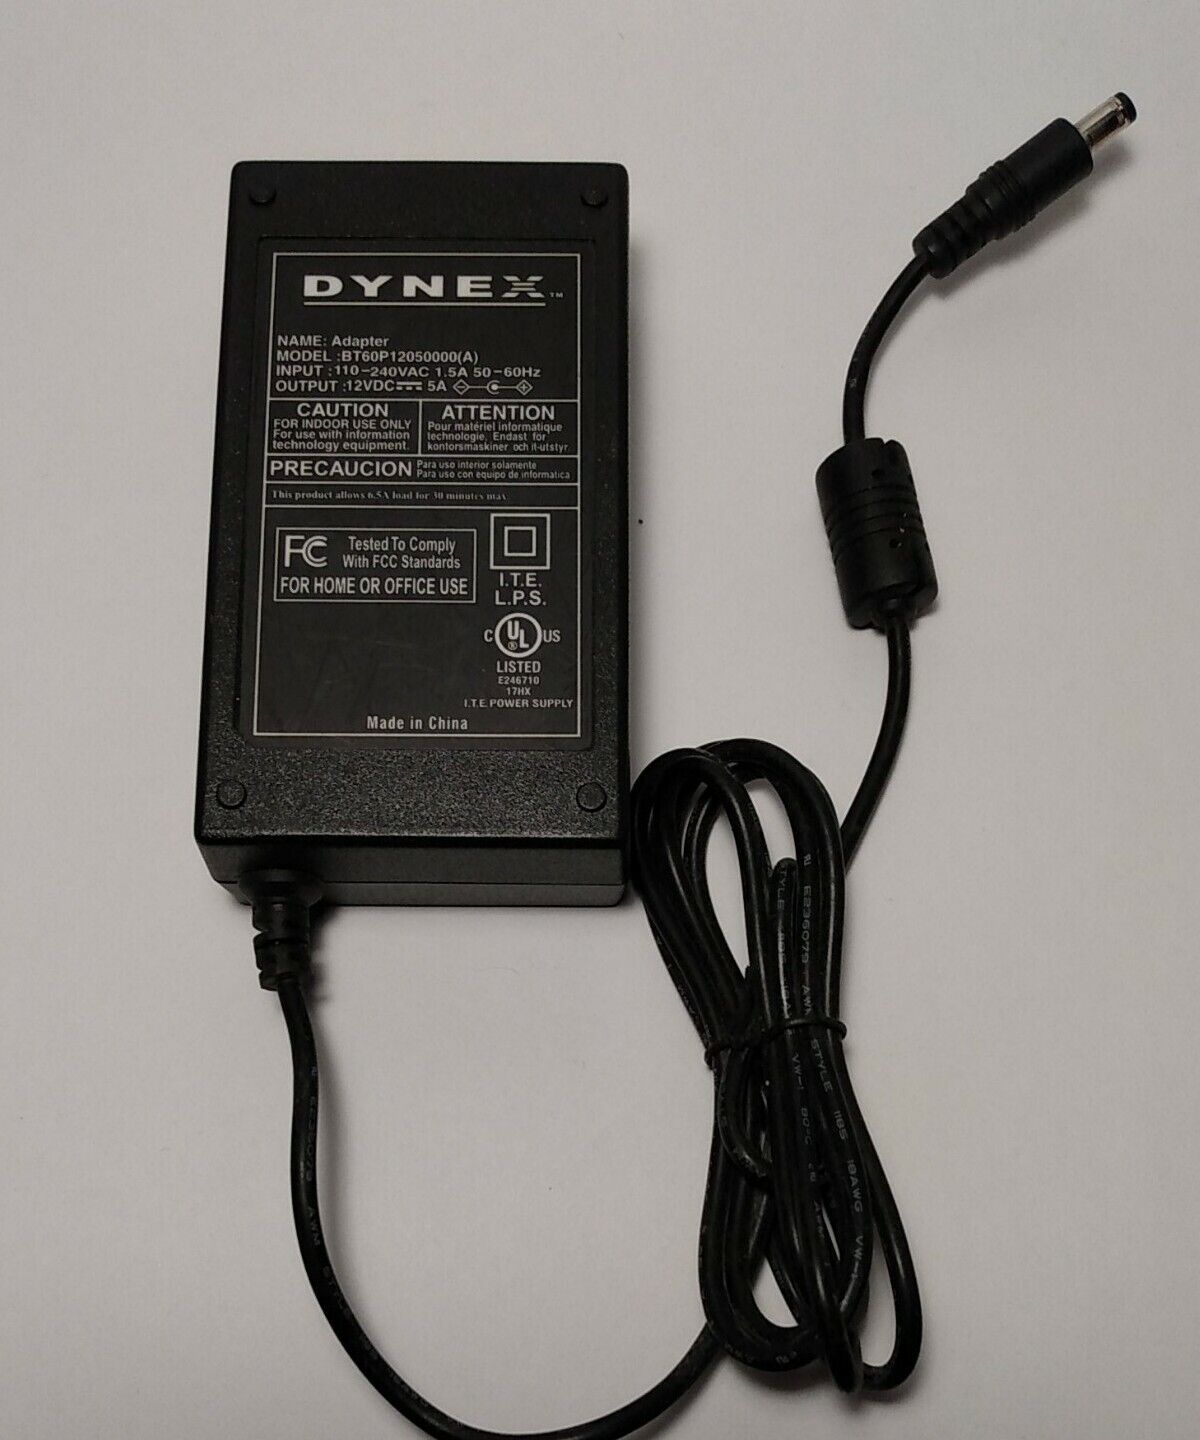 Dynex BT60P12050000(A) Power Supply AC Adapter DC 12V 5A ( No Power Cord) Brand: Dynex Type: Adapter Custom Bundle